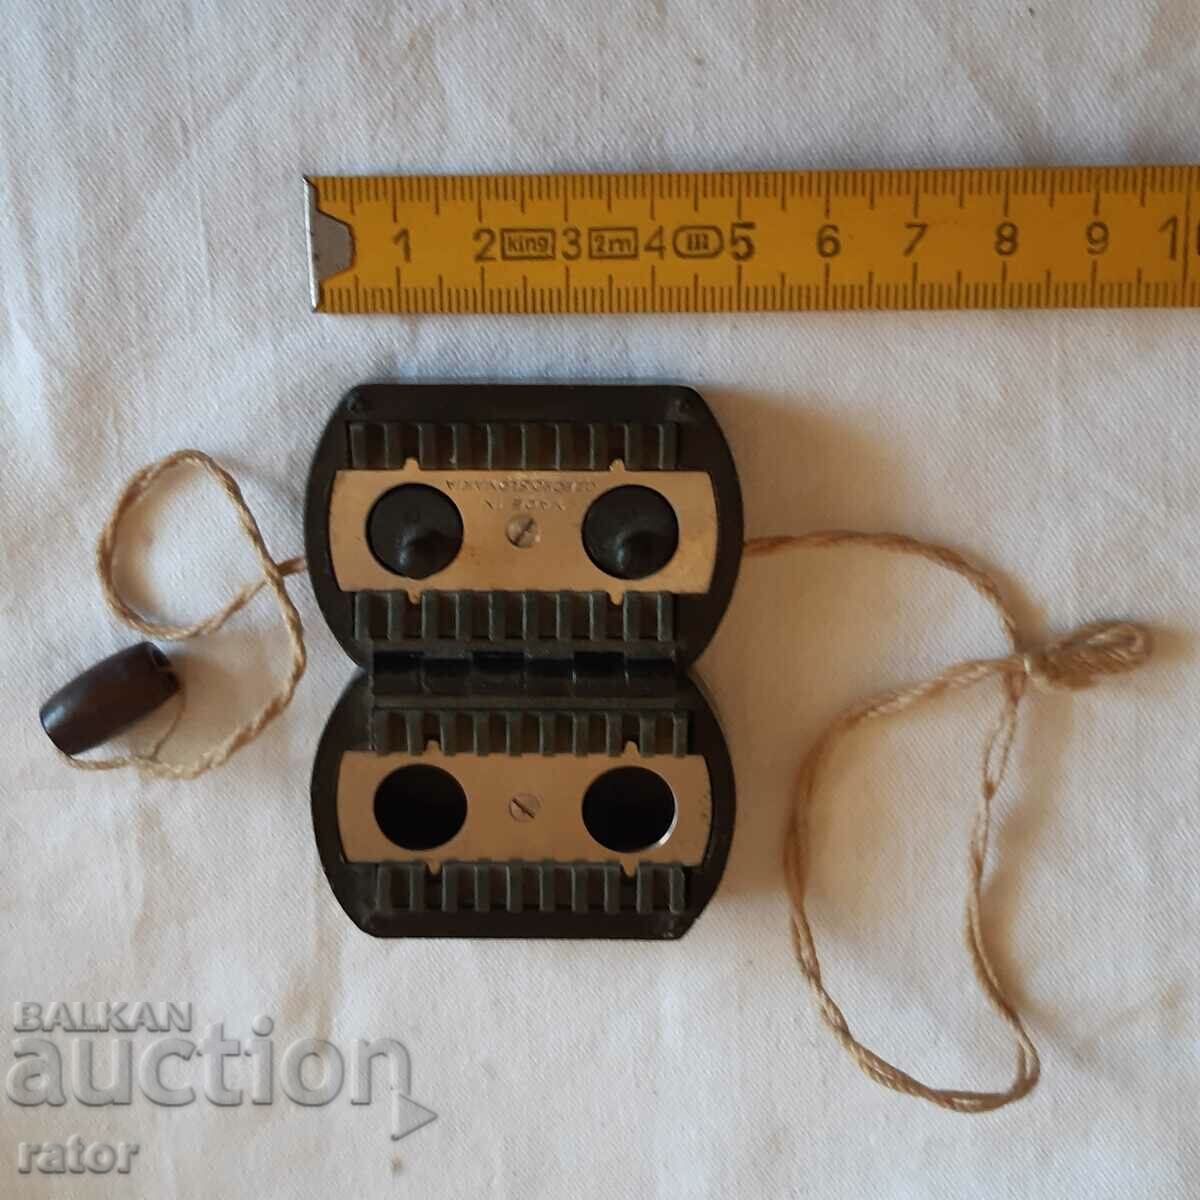 Old sharpener, a device for sharpening razor blades